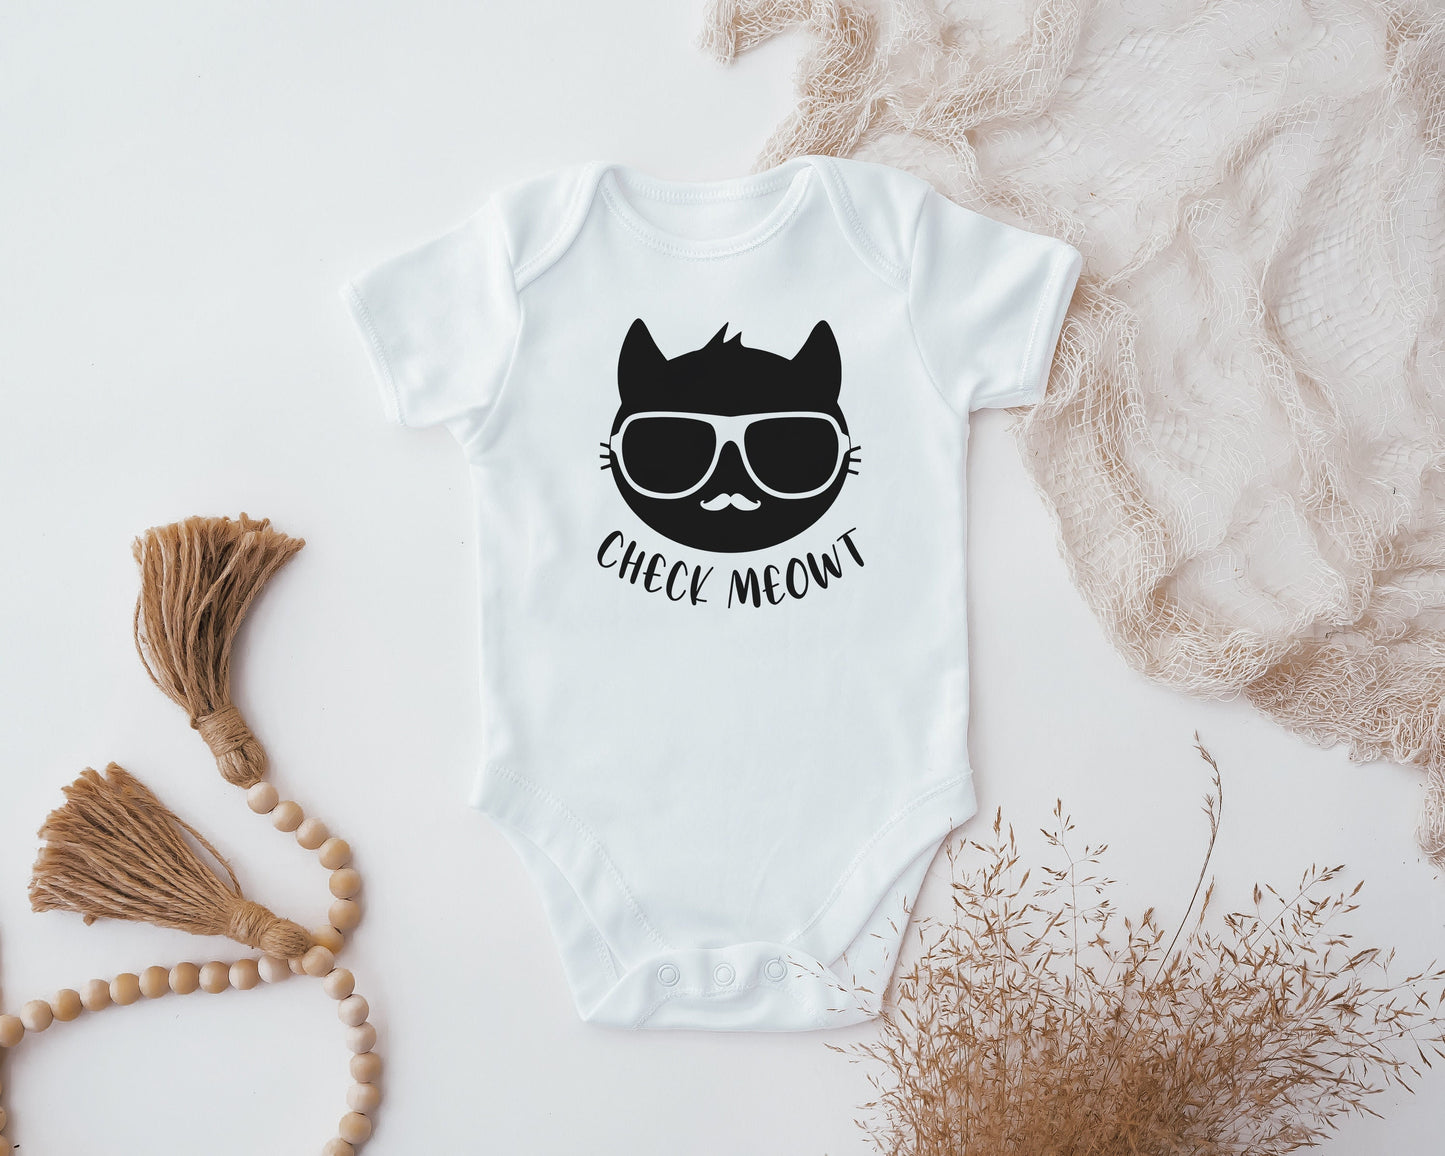 Check Meowt Baby Bodysuit